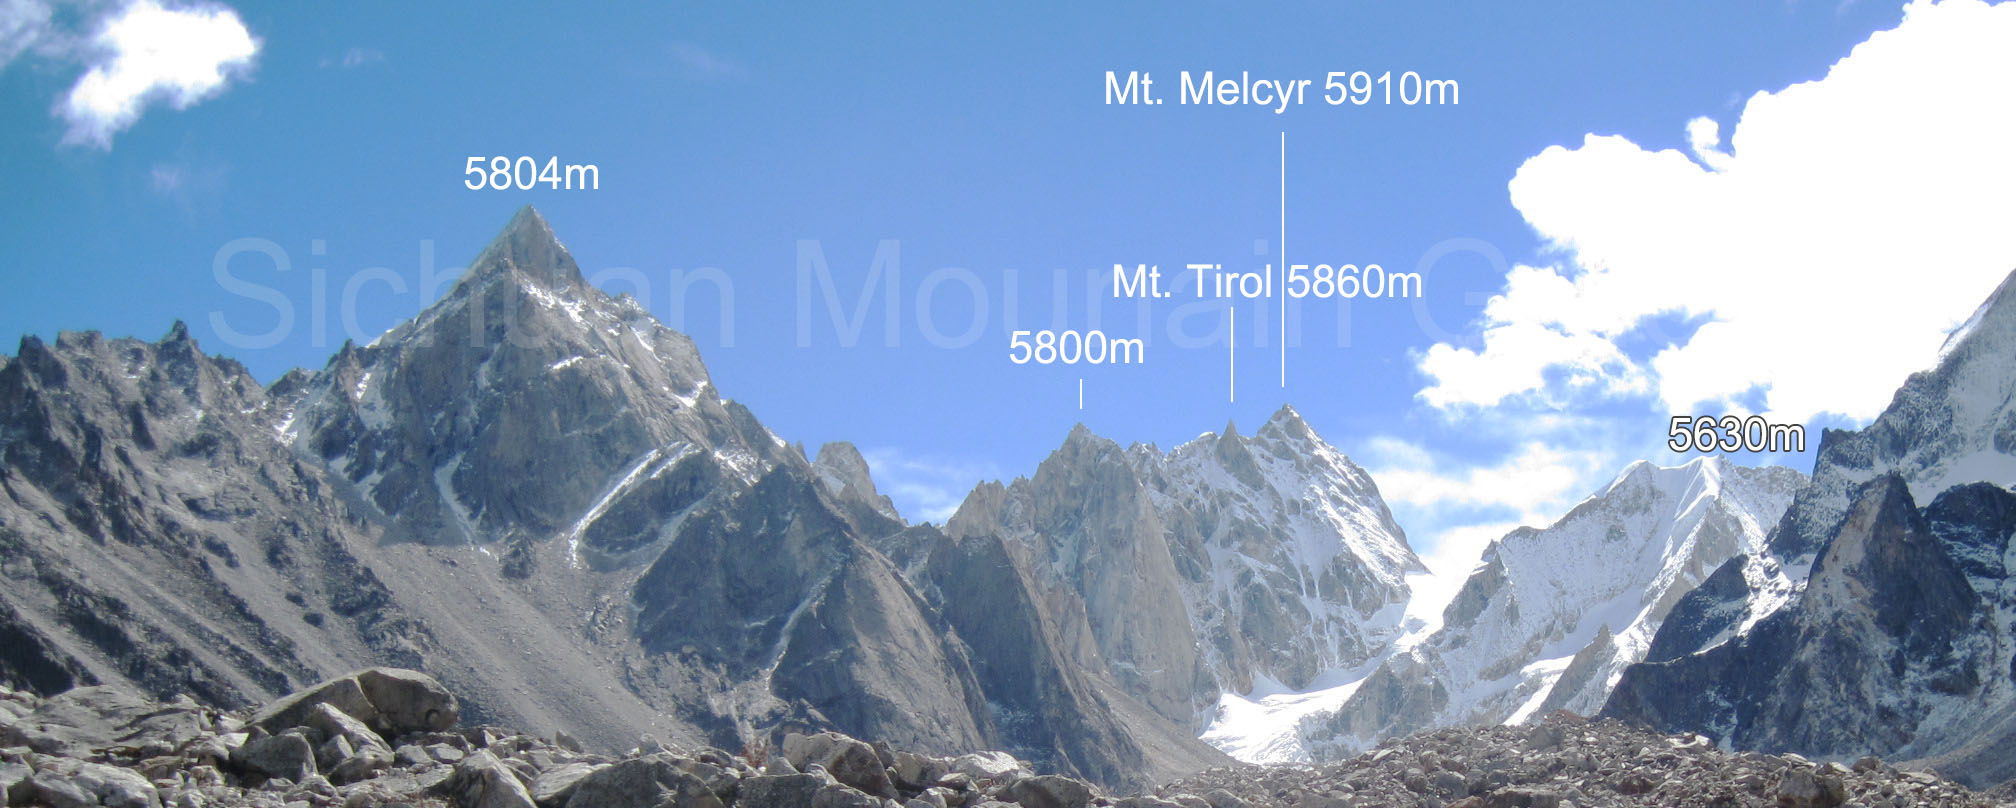 Peak 5804 and Mt. Melcyr Mt. Tirol